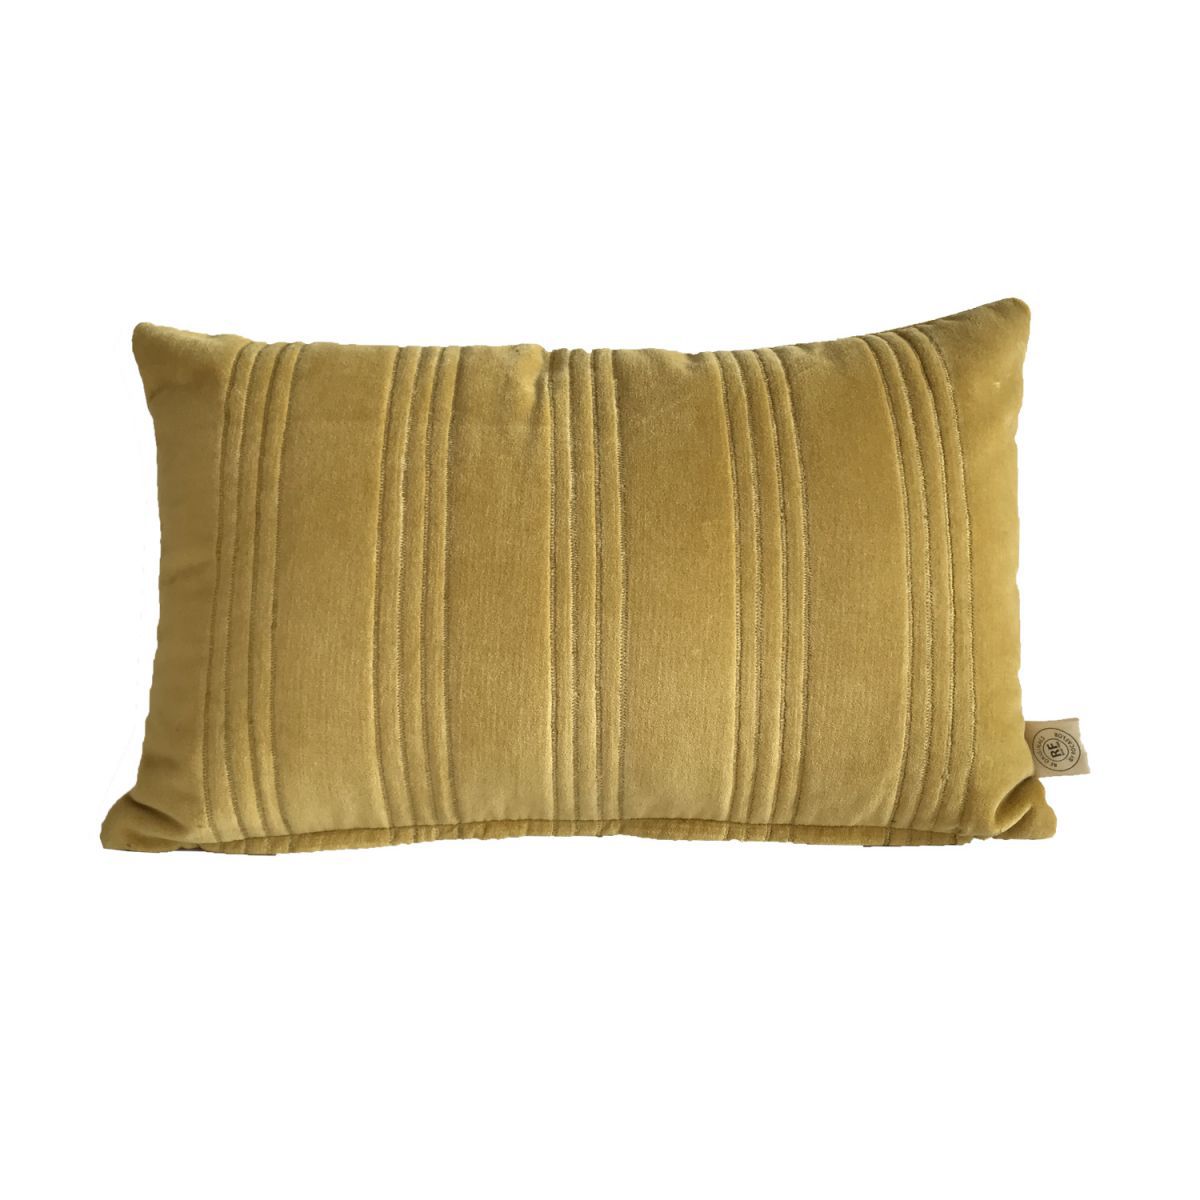 cushion velvet ocher yellow with gold stitching 50x30cm